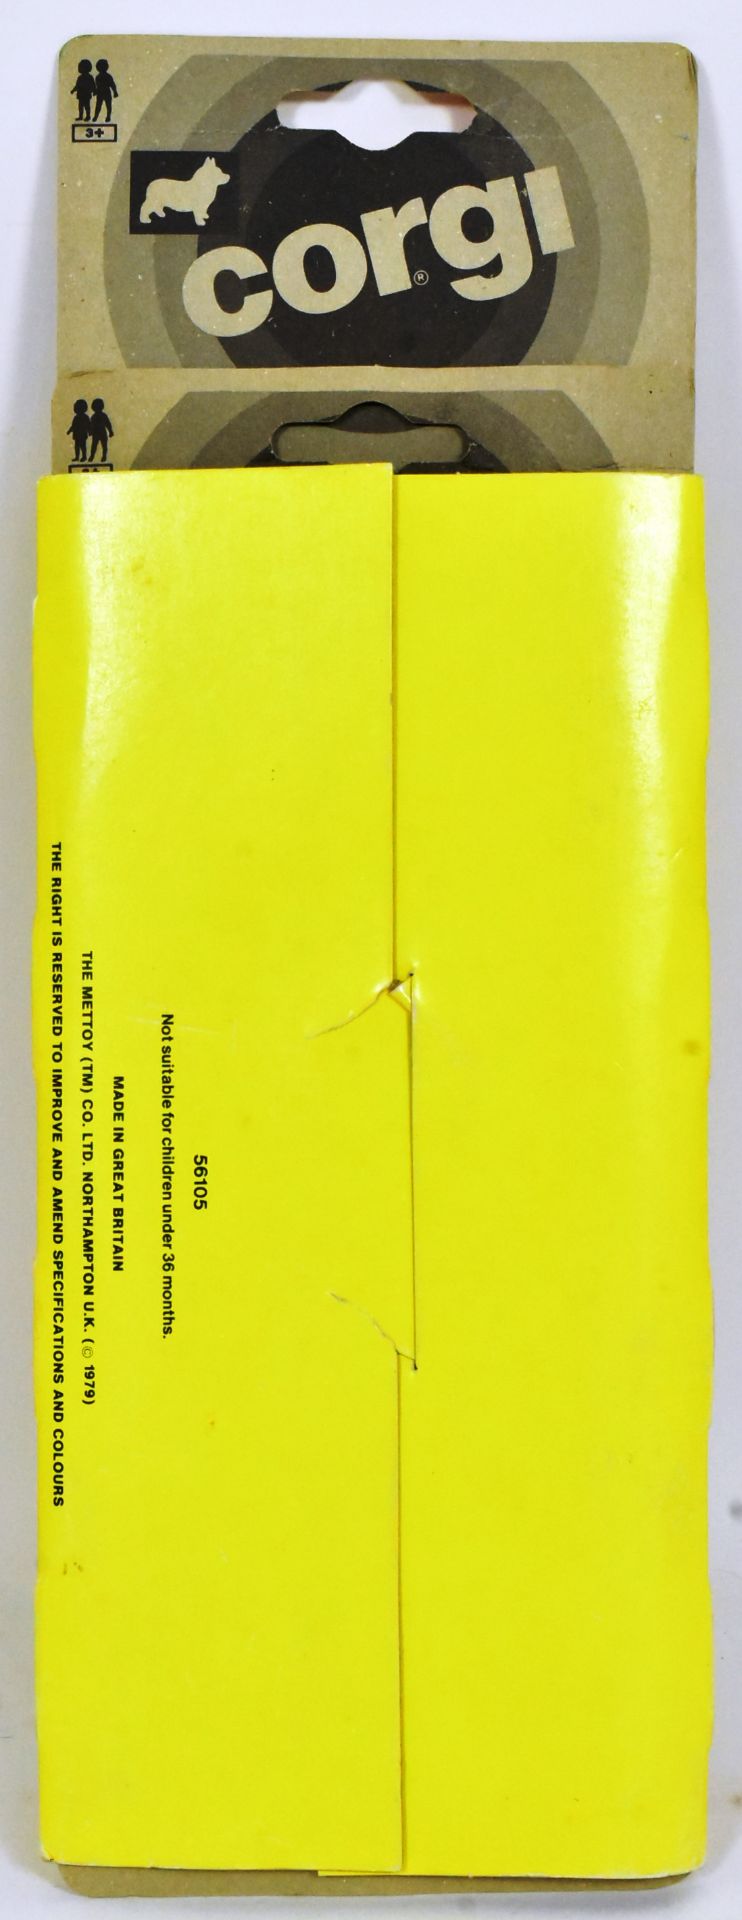 CORGI JUNIORS - 67 - EX-SHOP STOCK TRADE PACK OF DIECAST MODELS - Image 4 of 4